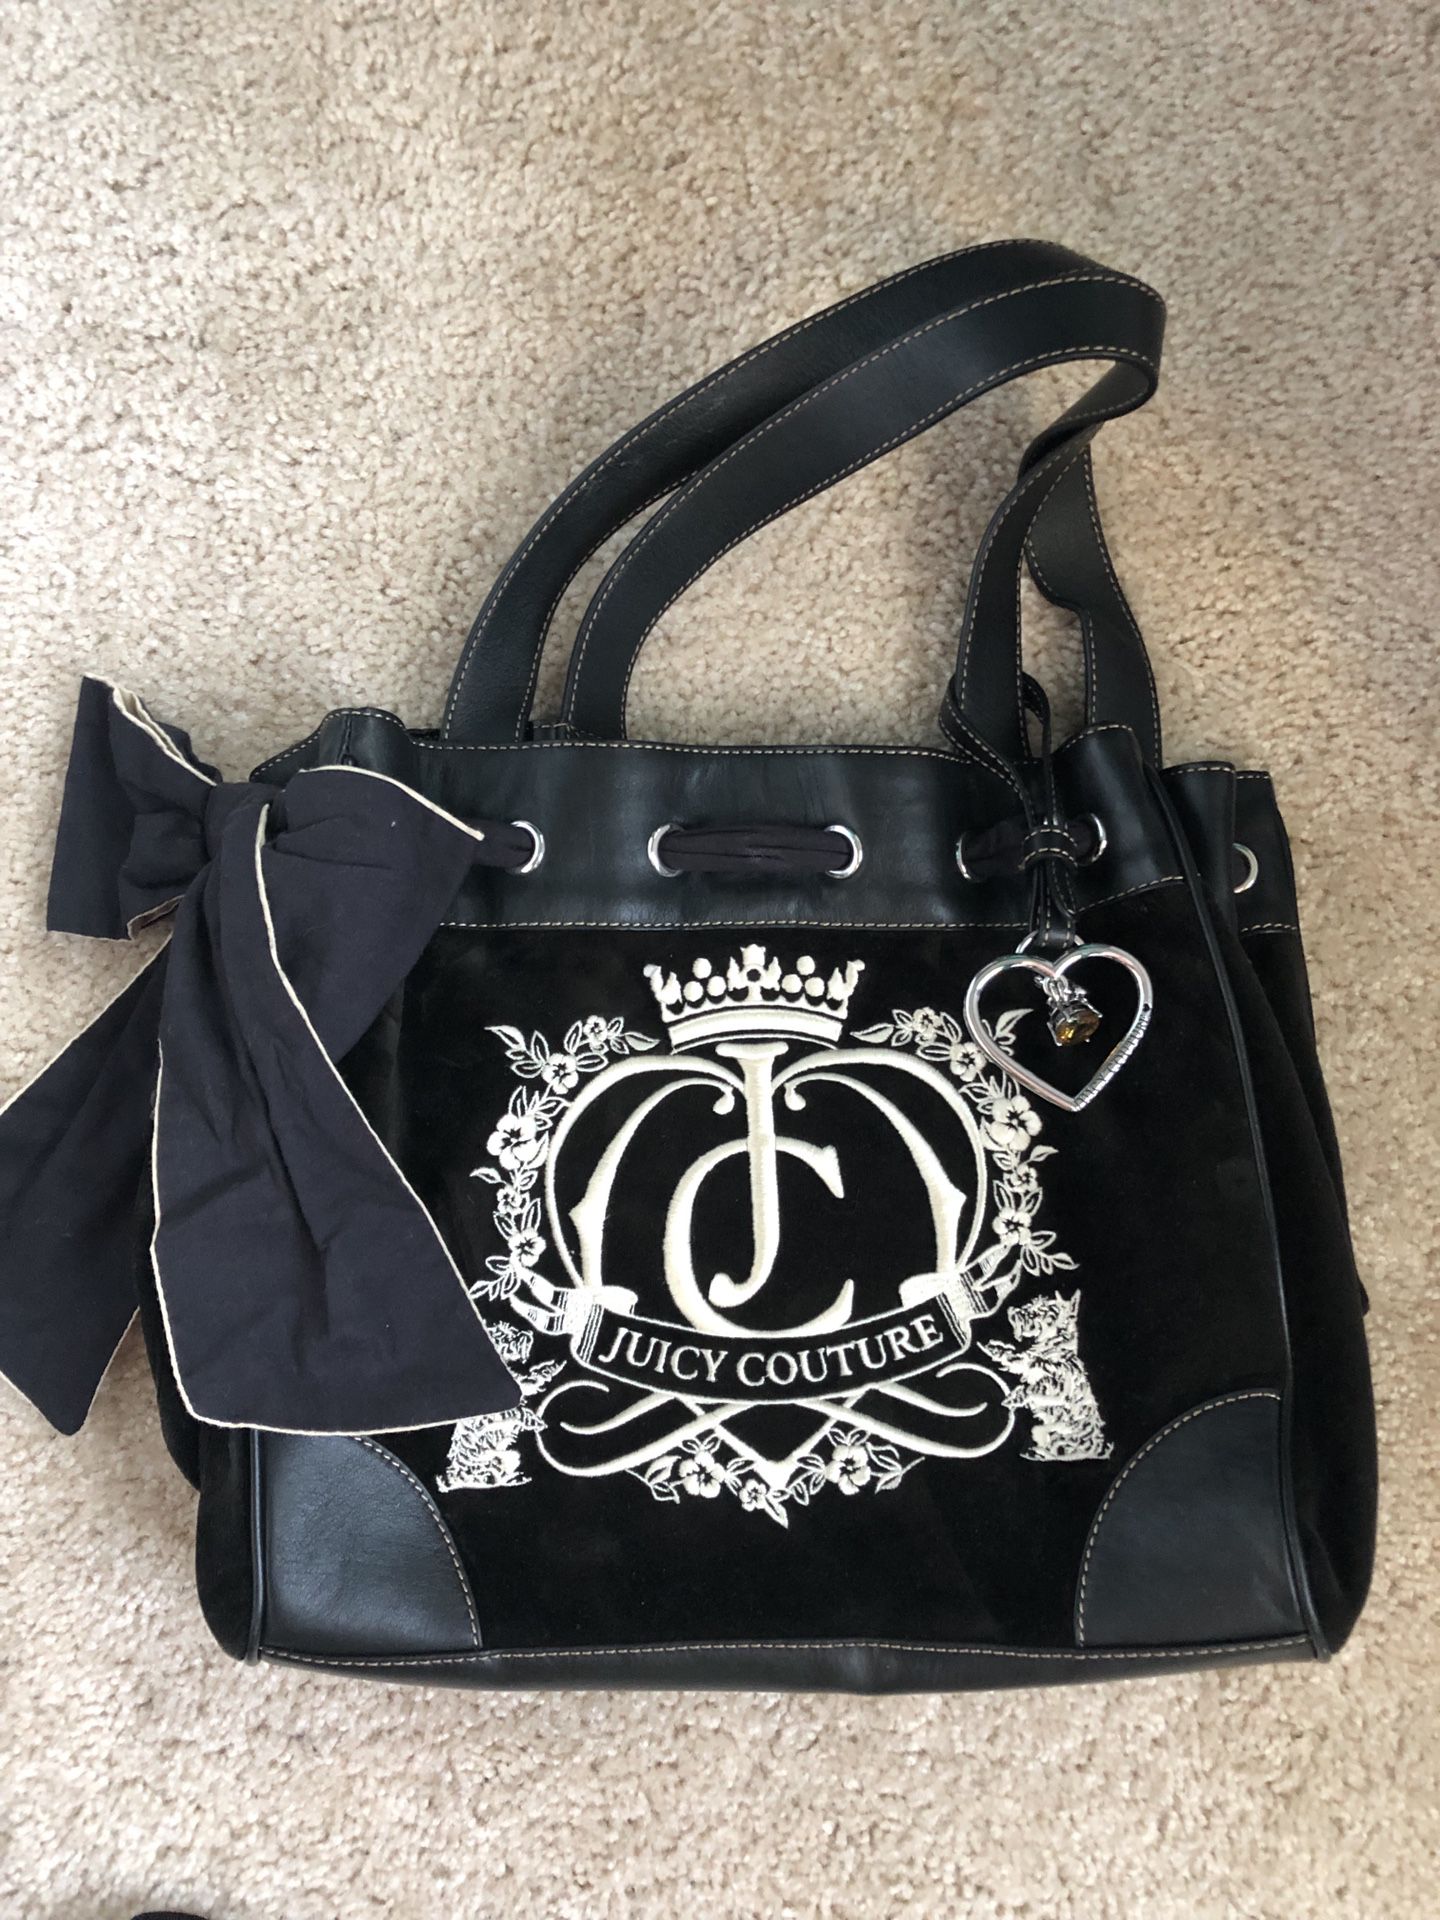 Juicy Couture - Large Black Handbag